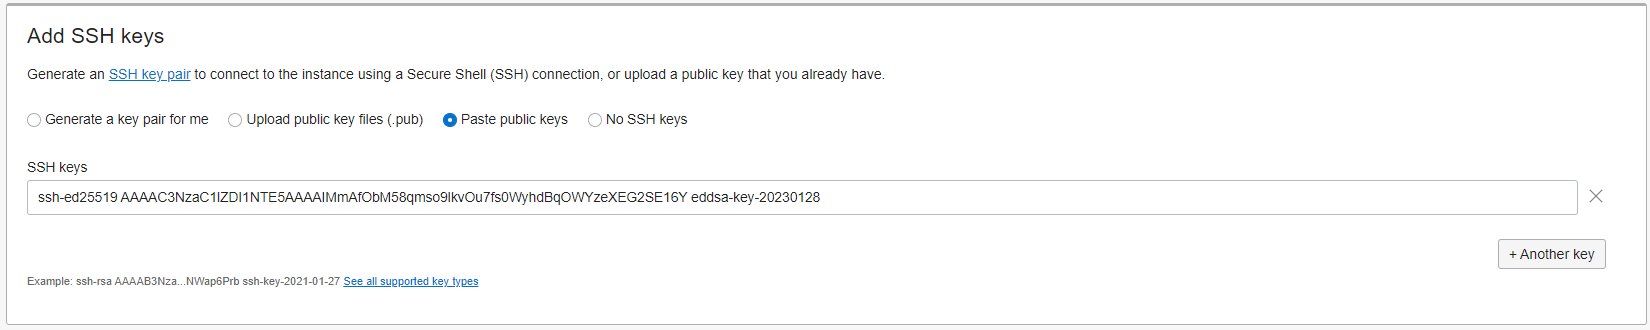 Oracle Cloud Add SSH Keys